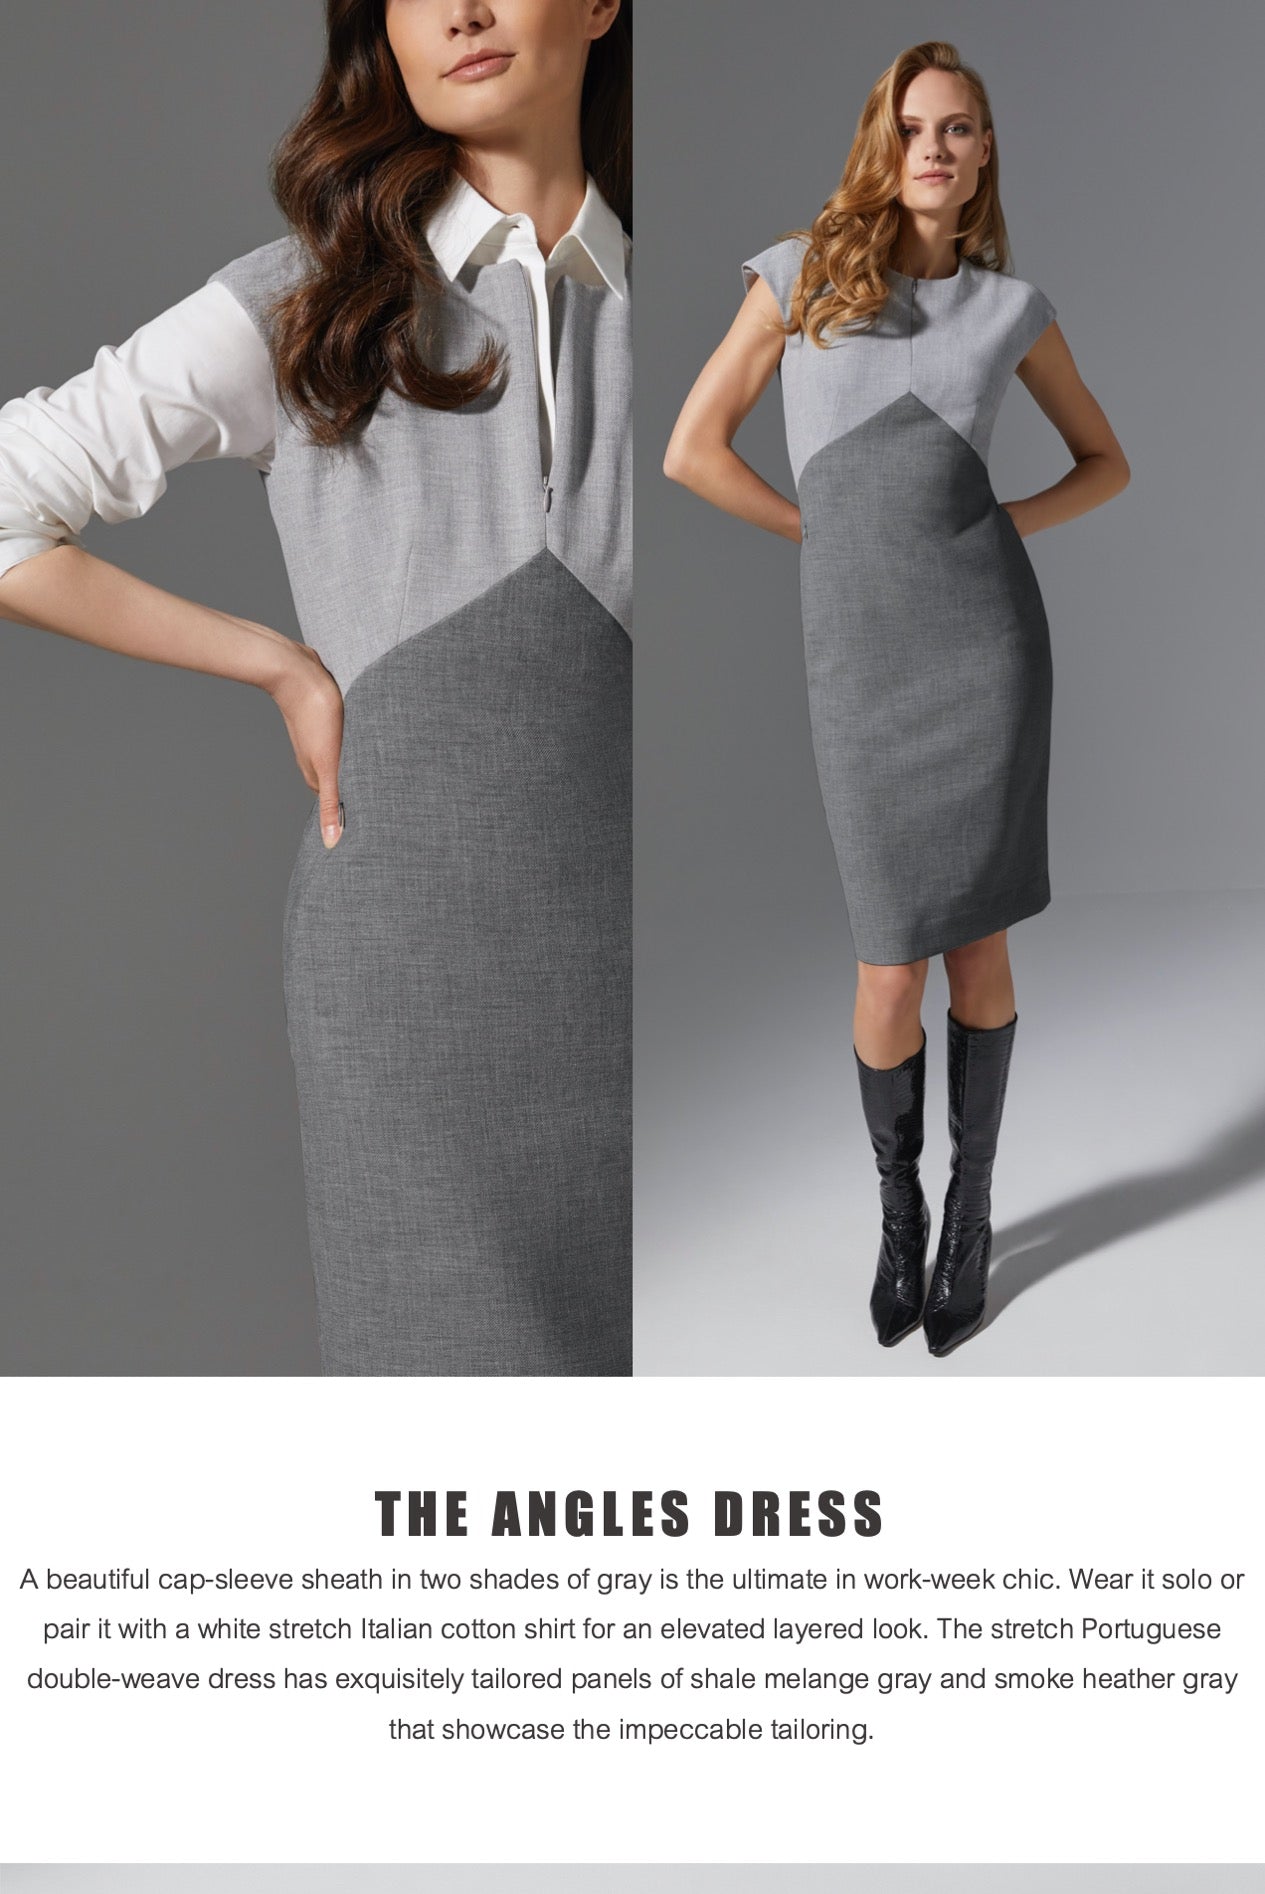 The Angles Dress